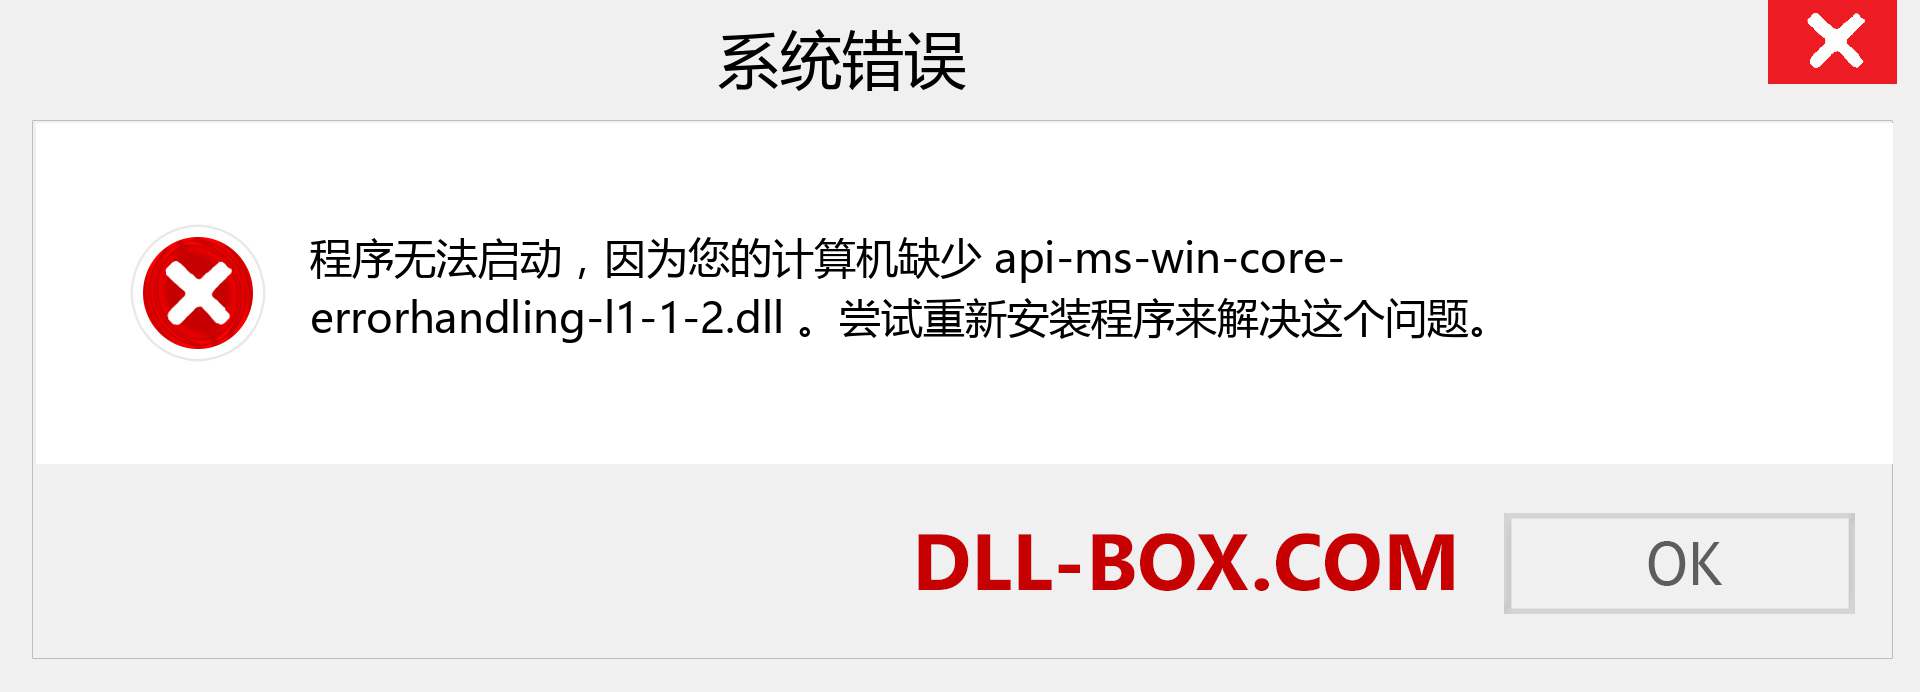 api-ms-win-core-errorhandling-l1-1-2.dll 文件丢失？。 适用于 Windows 7、8、10 的下载 - 修复 Windows、照片、图像上的 api-ms-win-core-errorhandling-l1-1-2 dll 丢失错误